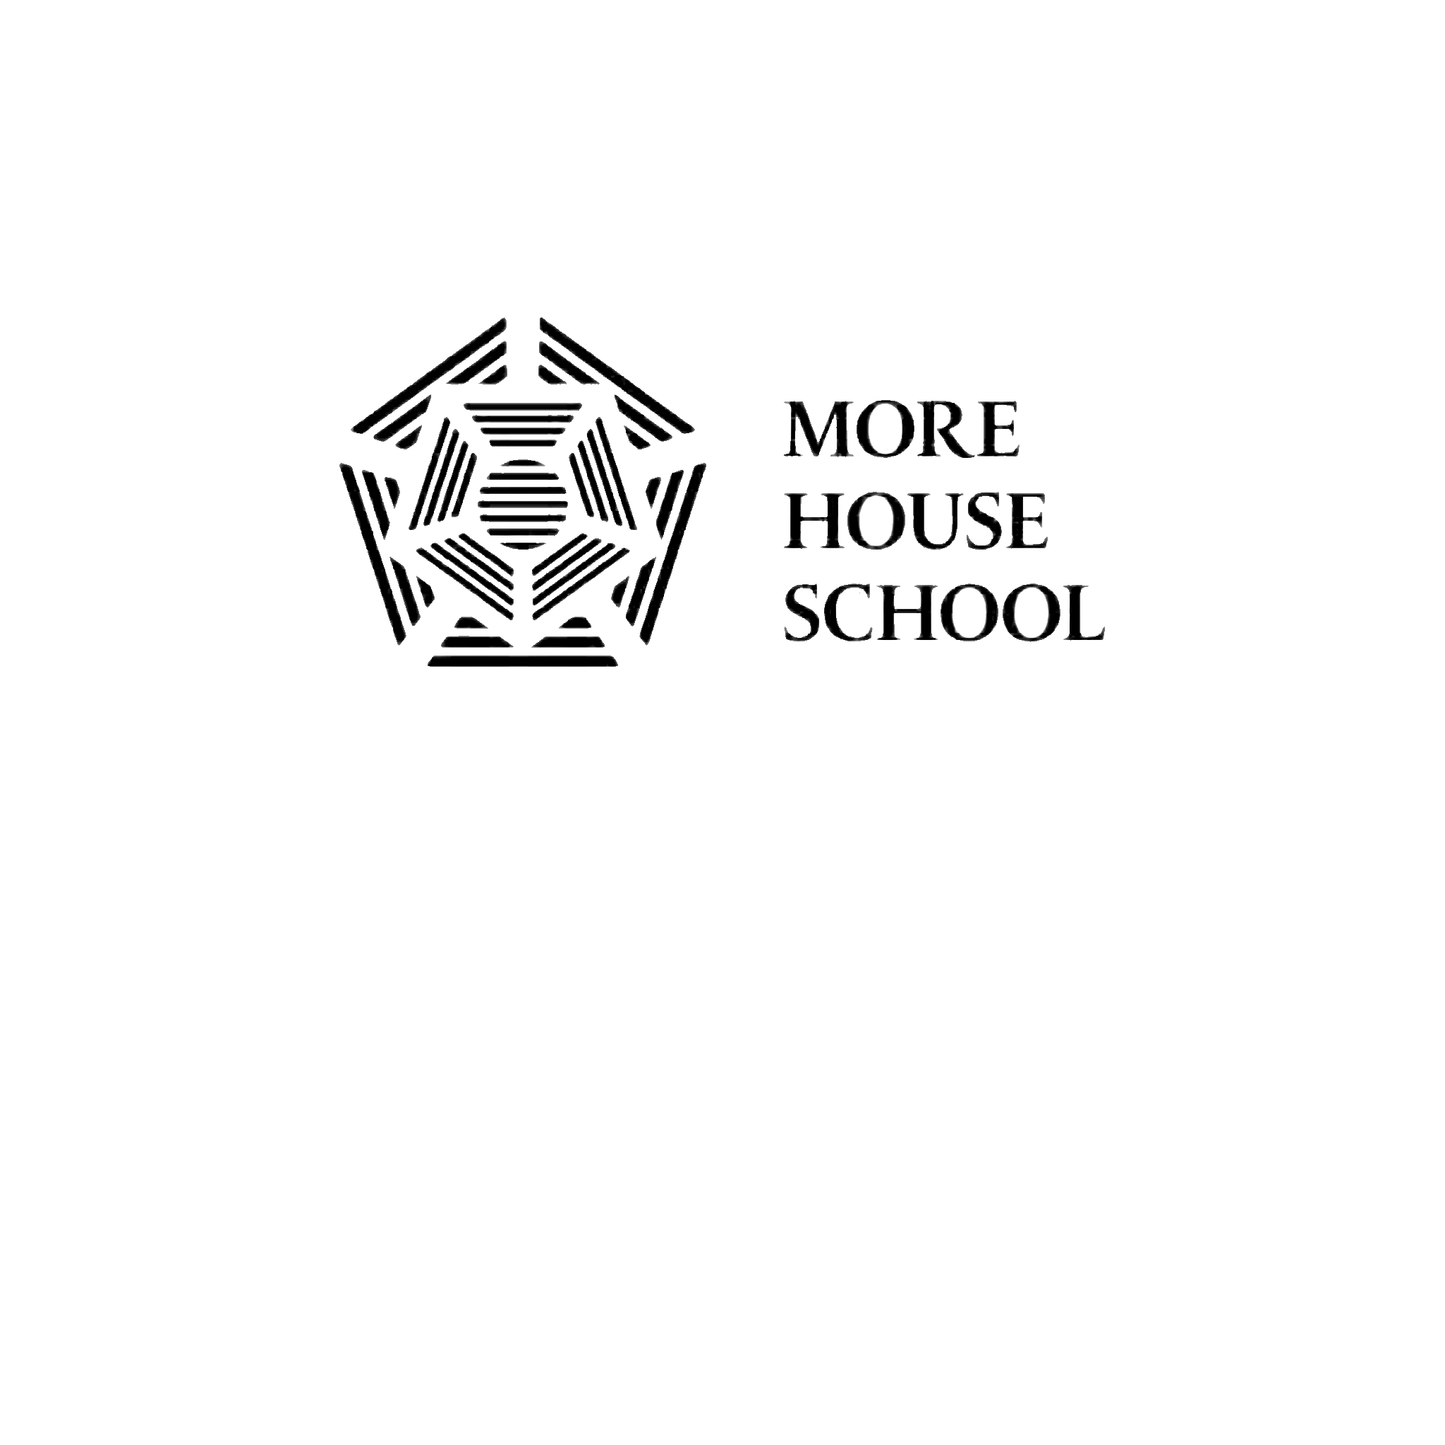 More House School: 11+ Maths (2013) [97]